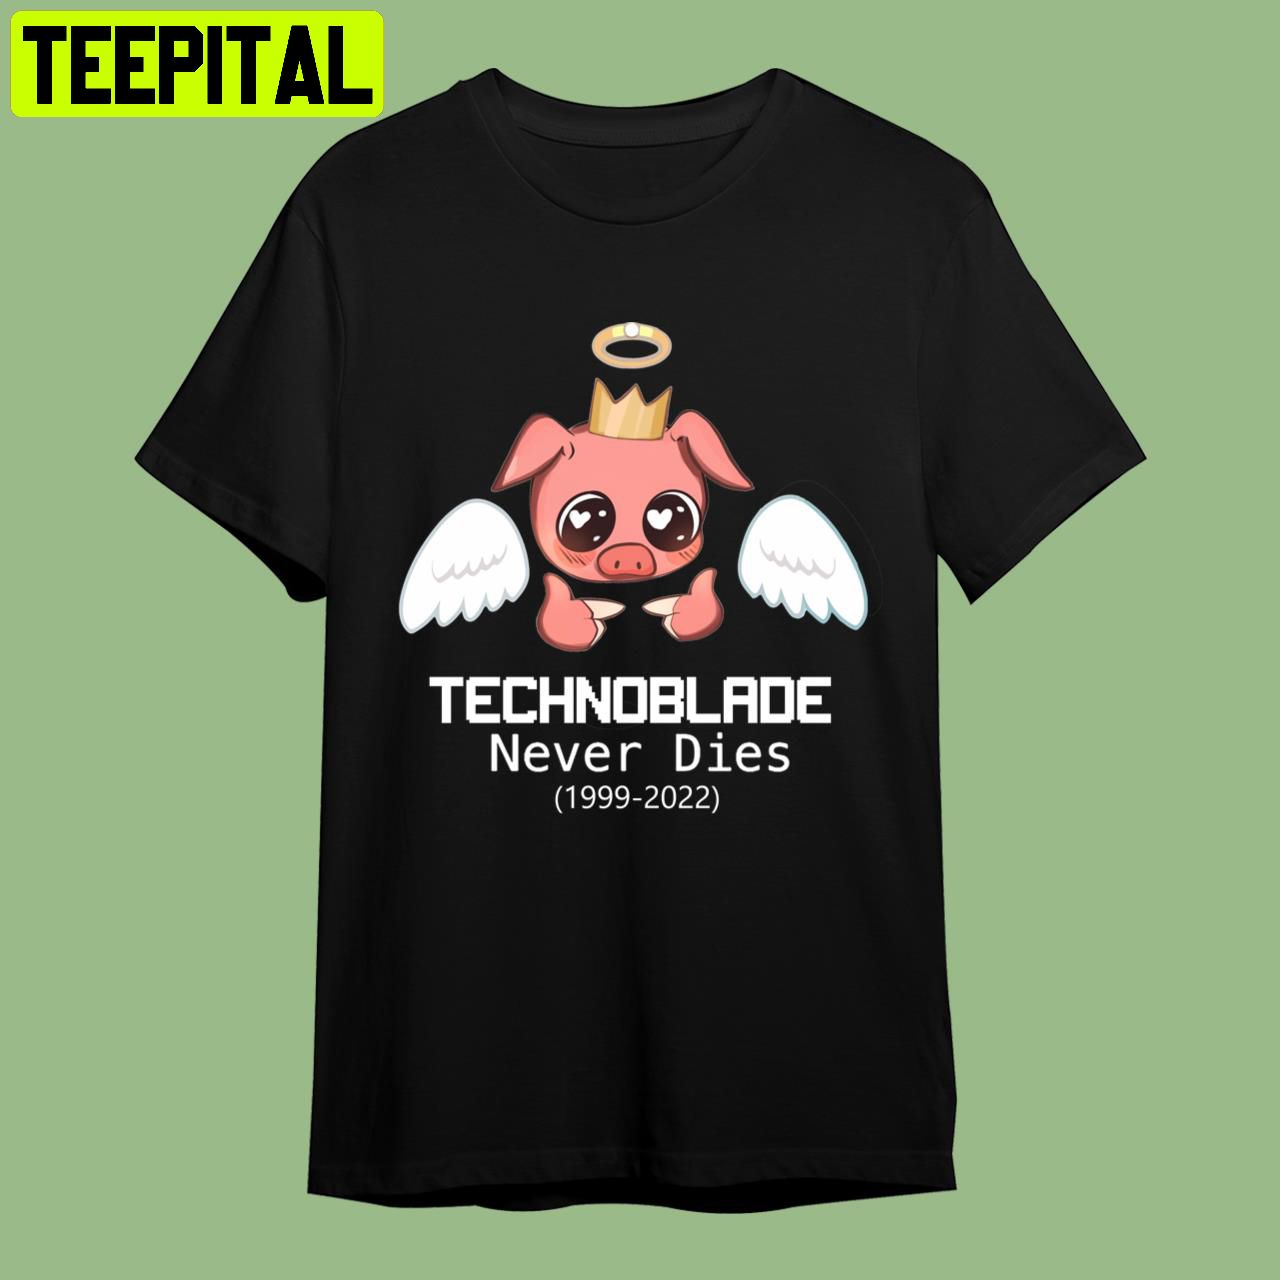 Technoblade - Technoblade Never Dies | Sticker